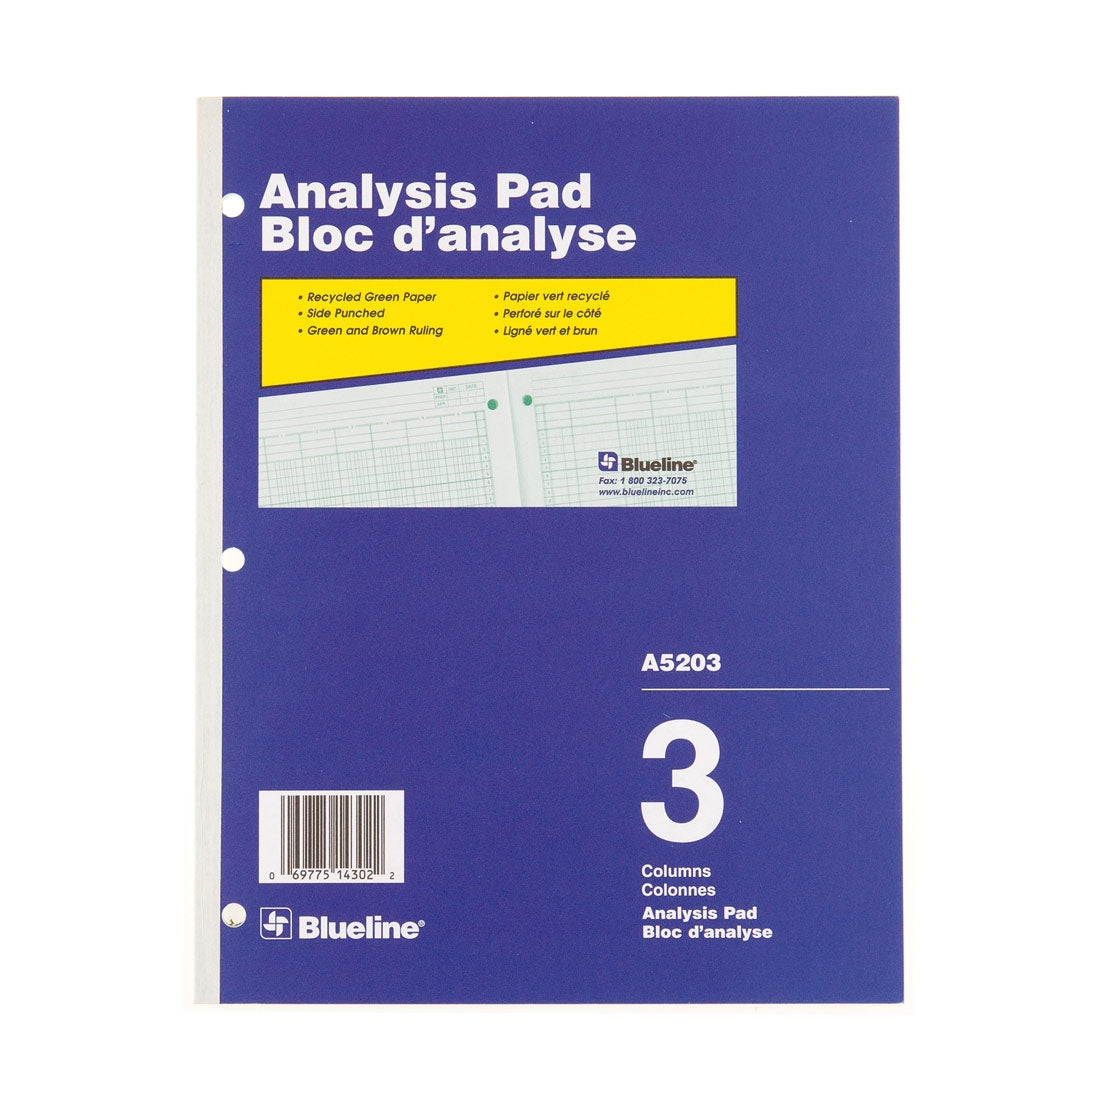 Analysis Pad - 3 Columns, A5203